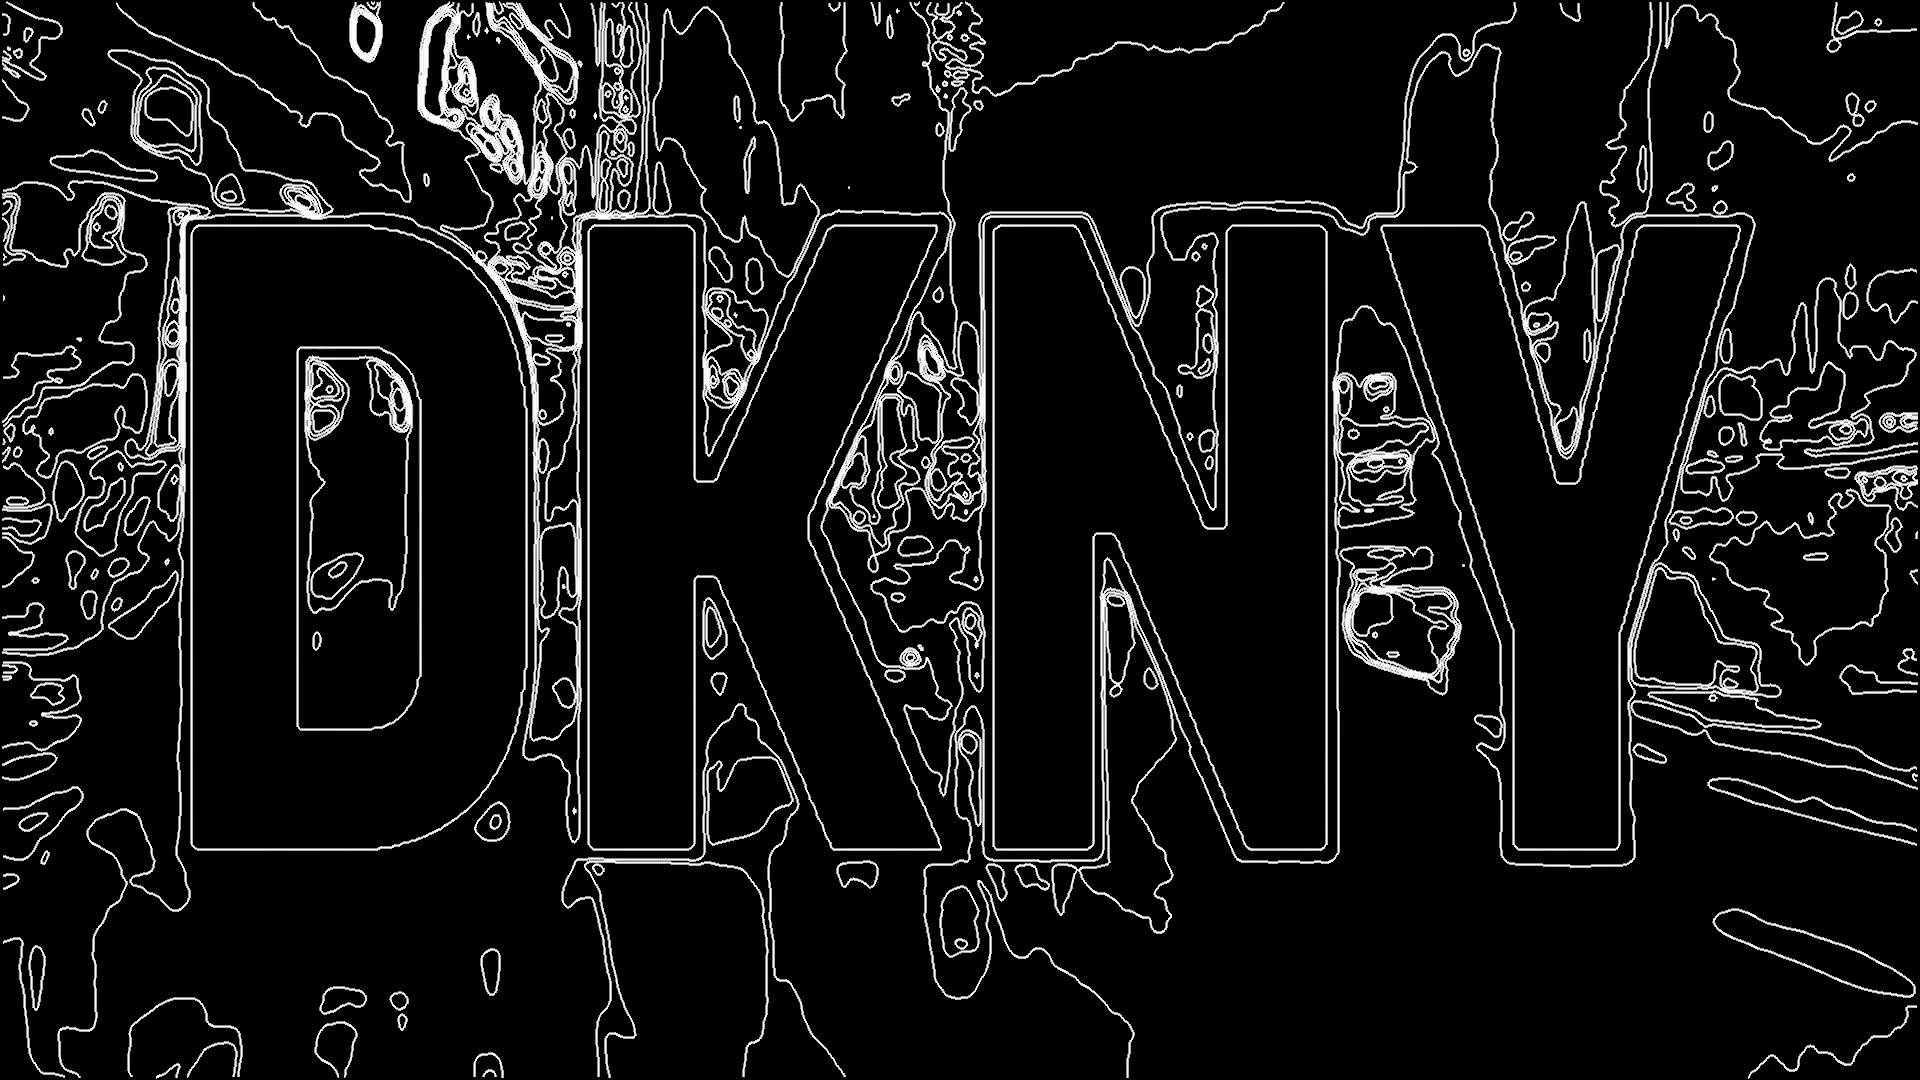 Download B&W DKNY Logo Banner Wallpaper